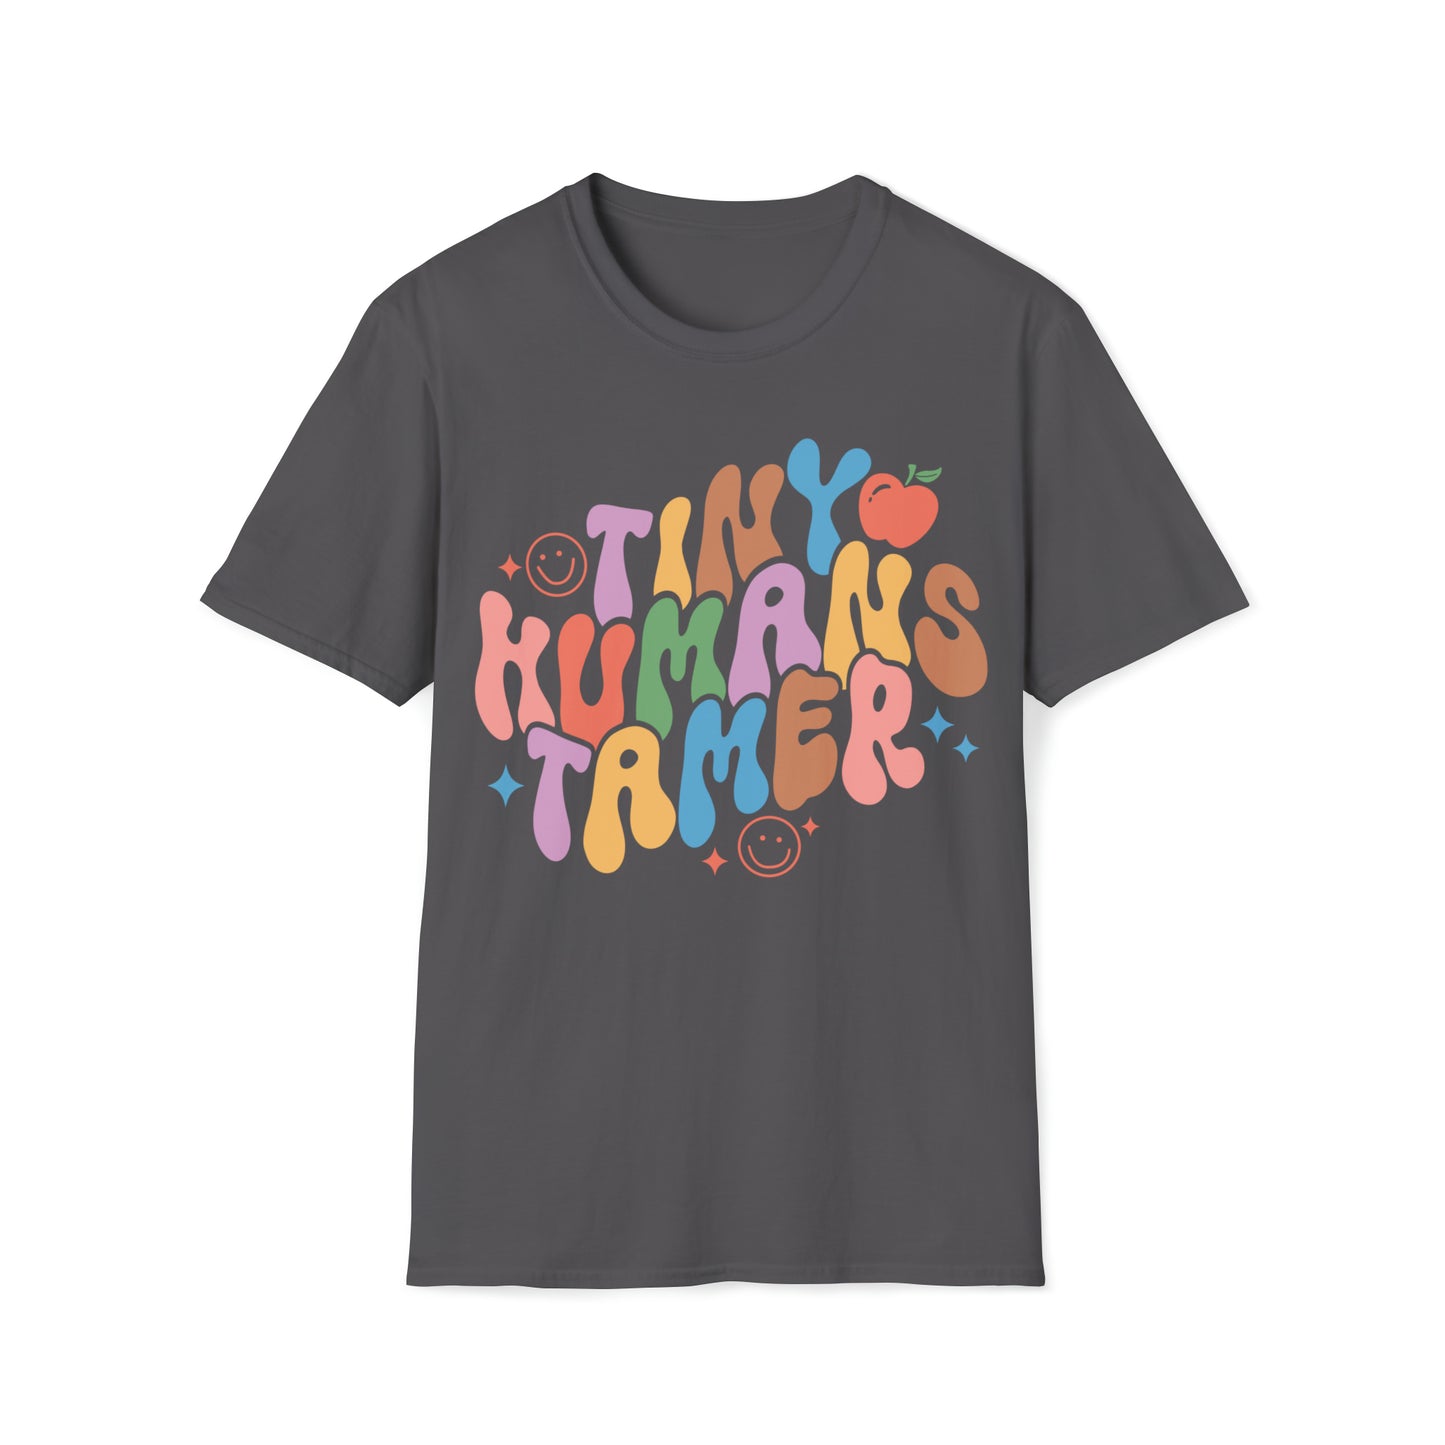 Tiny Human Tamer Shirt for Teachers